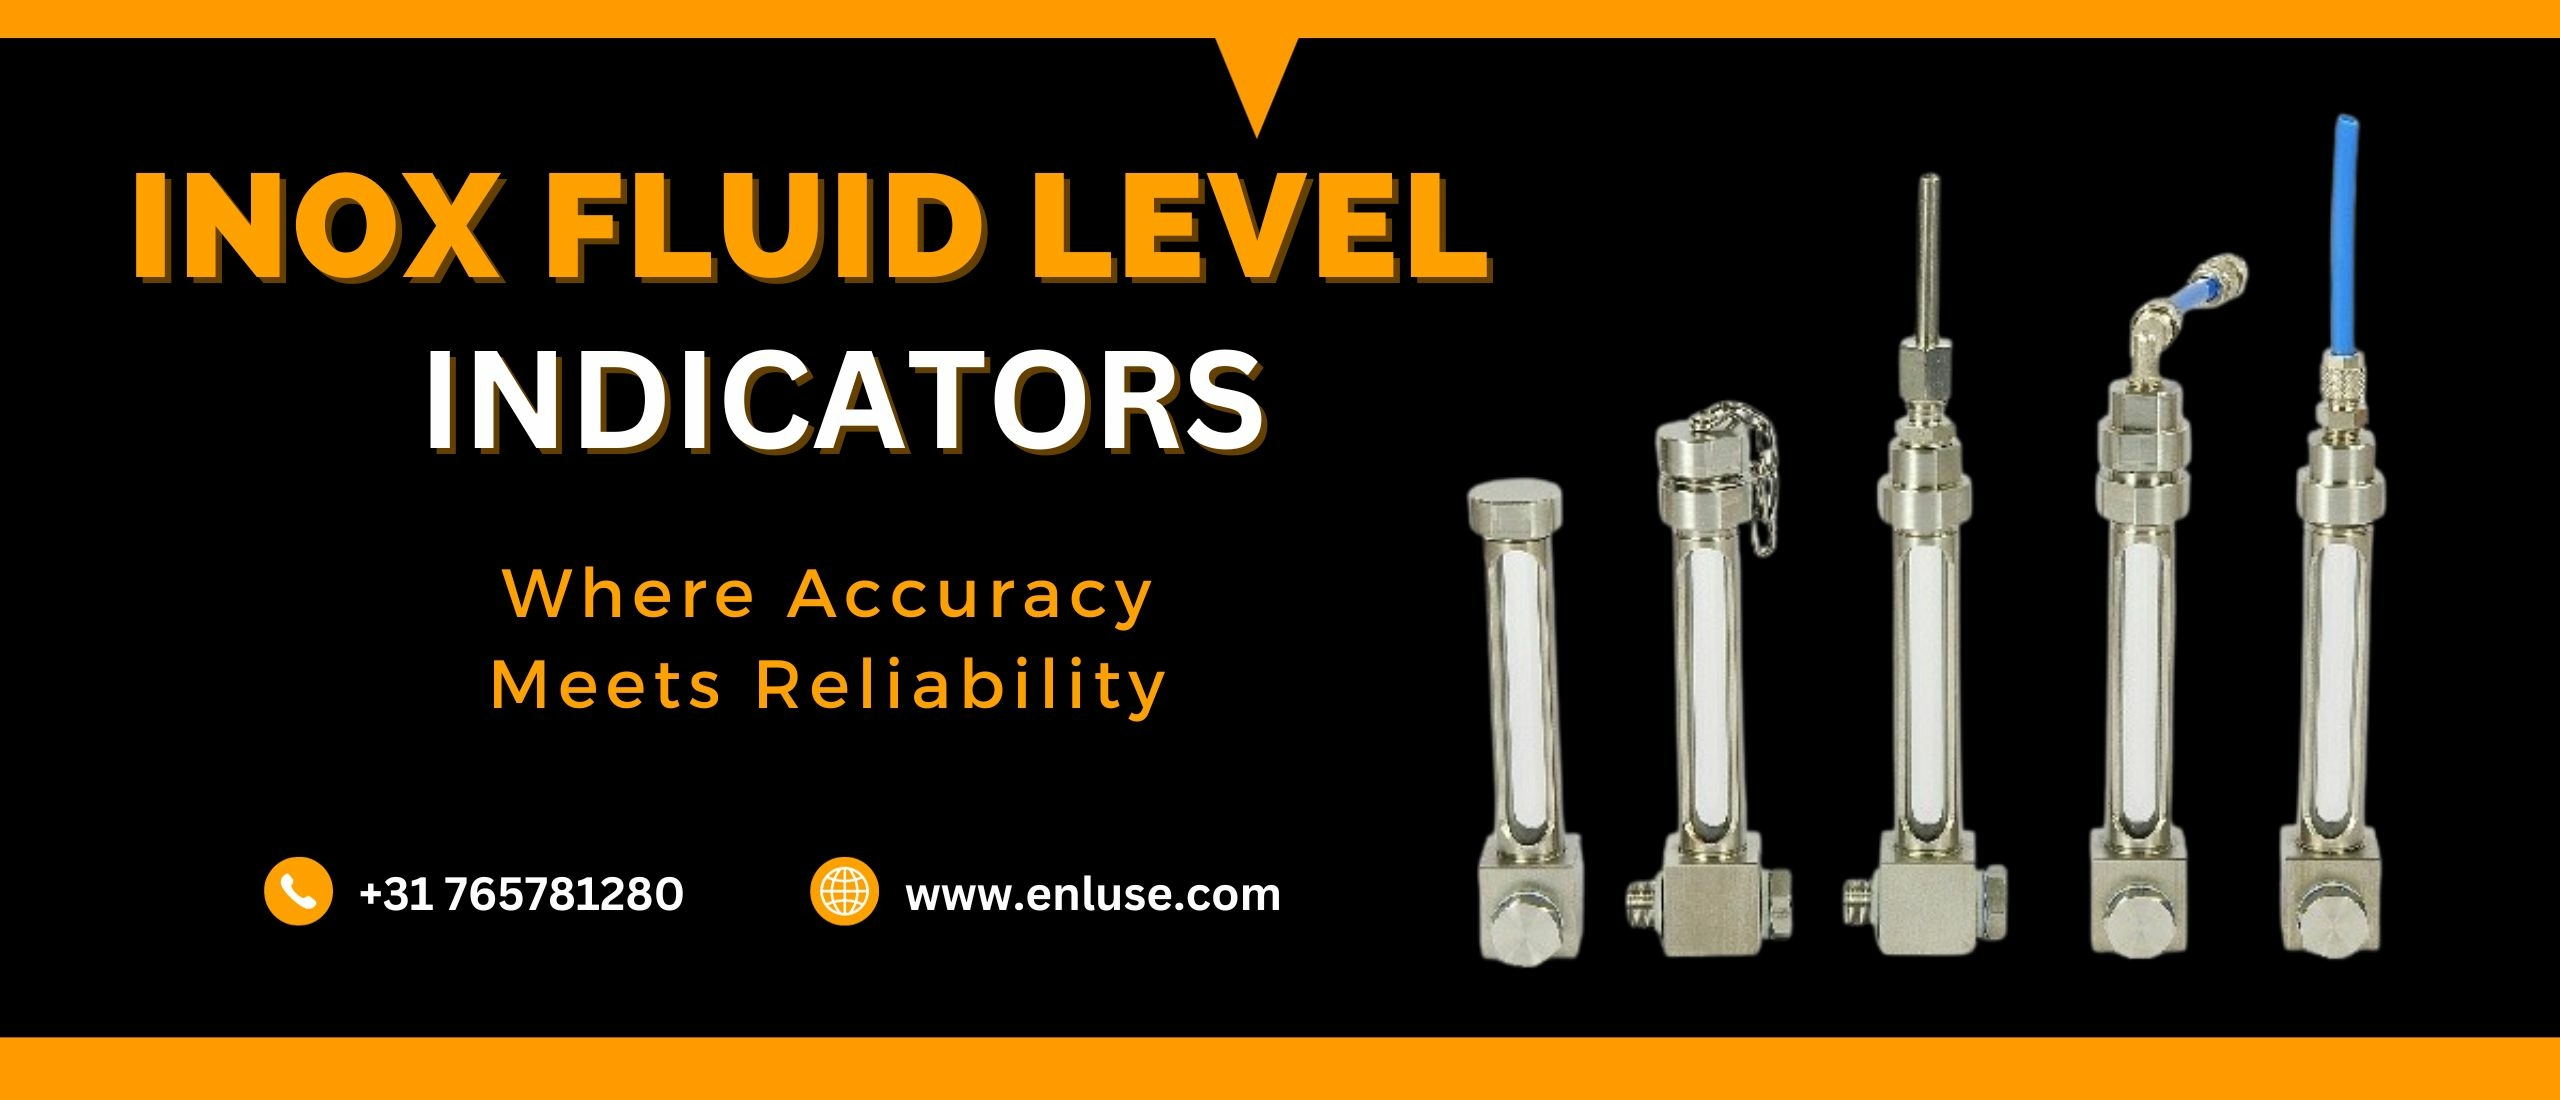 INOX Fluid Level Indicator: Precision Monitoring for Industrial Liquid Levels